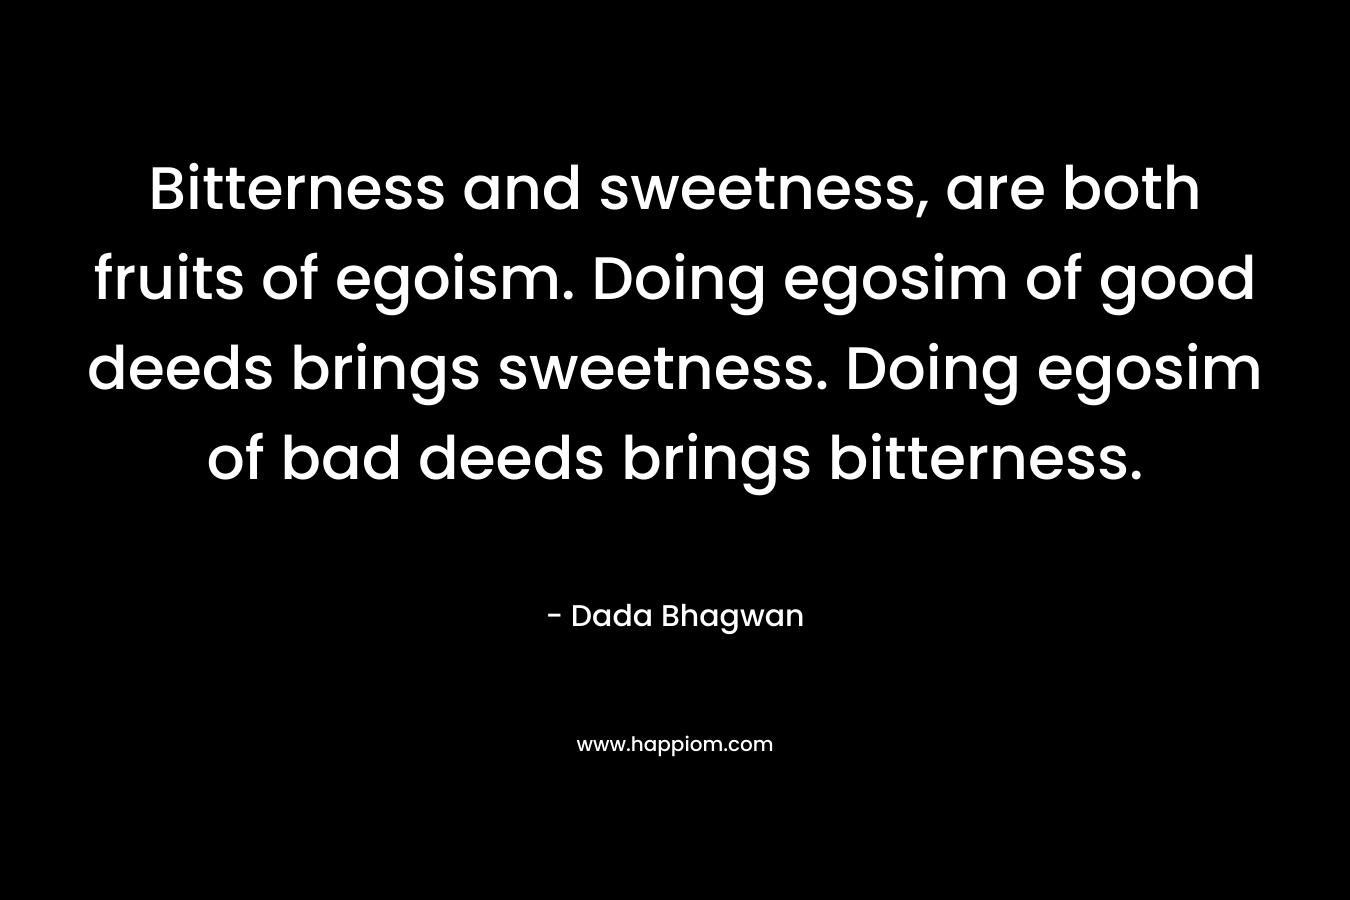 Bitterness and sweetness, are both fruits of egoism. Doing egosim of good deeds brings sweetness. Doing egosim of bad deeds brings bitterness.